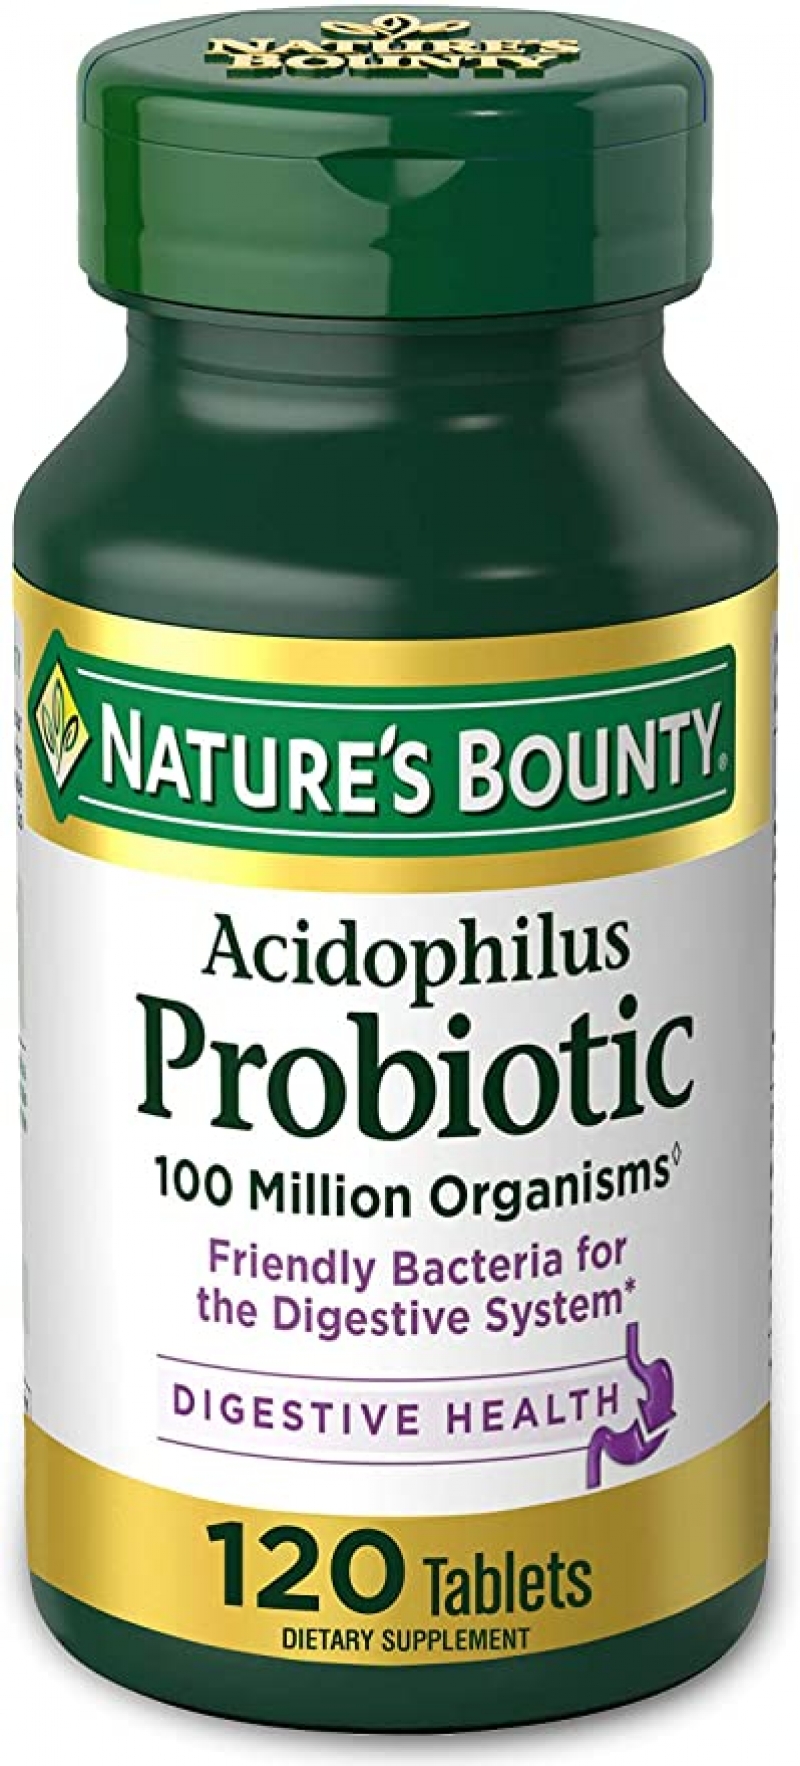 ihocon: Nature's Bounty Acidophilus Probiotic, 120 Tablets 益生菌 100 Million Organisms